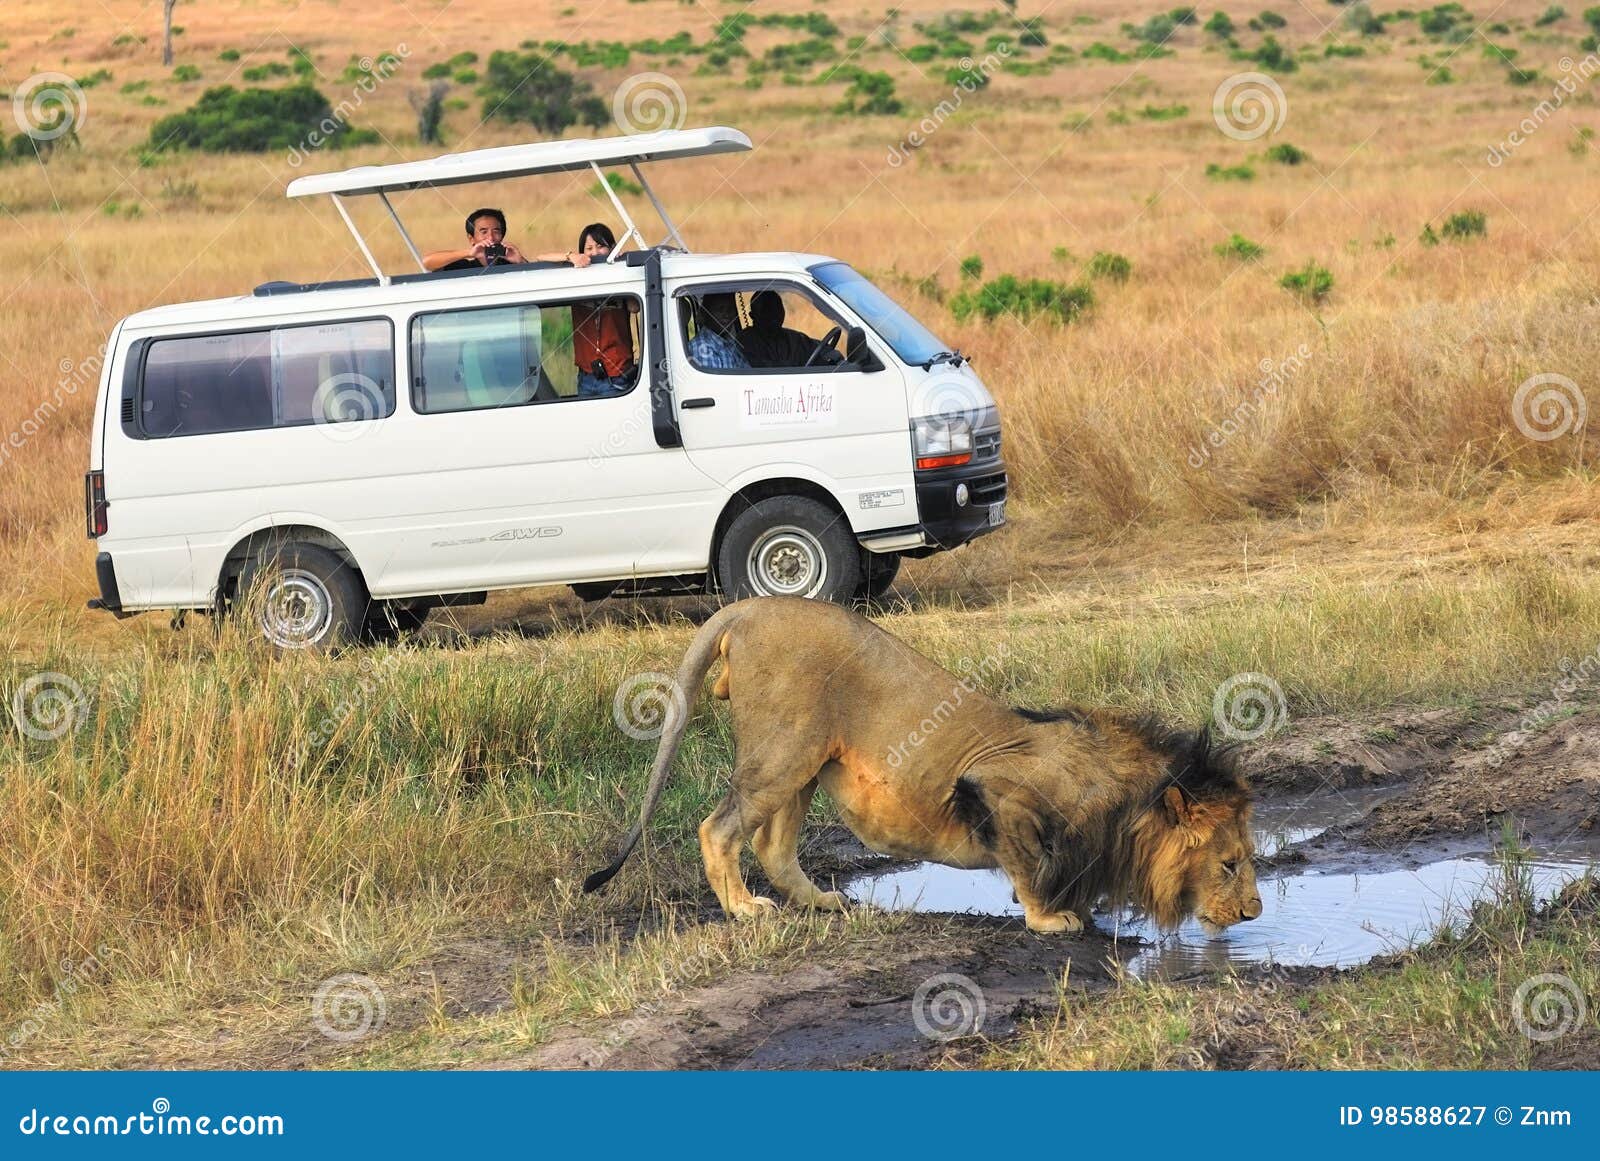 erven Dageraad Nathaniel Ward Safari in Masai Mara, Kenya. Touristic Car and Lion Editorial Photography -  Image of masai, carnivore: 98588627